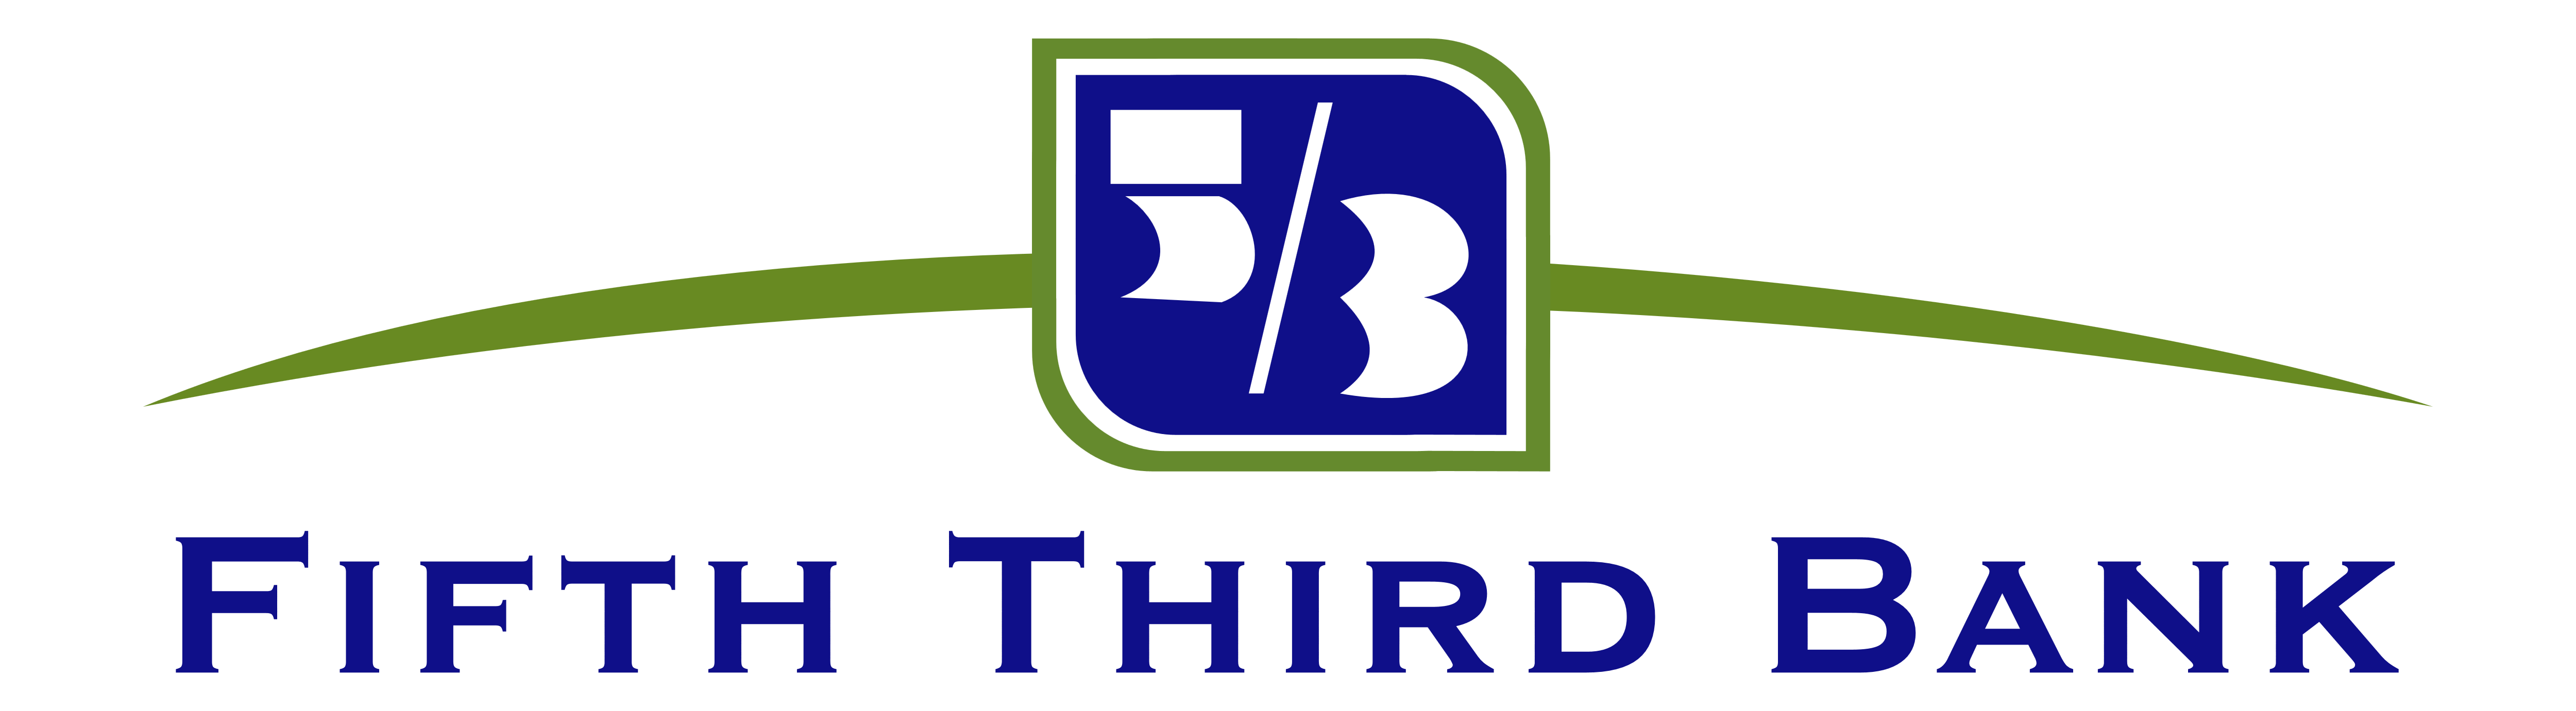 Fifth_Third_Bank_logo_logotype_emblem_5_3-1